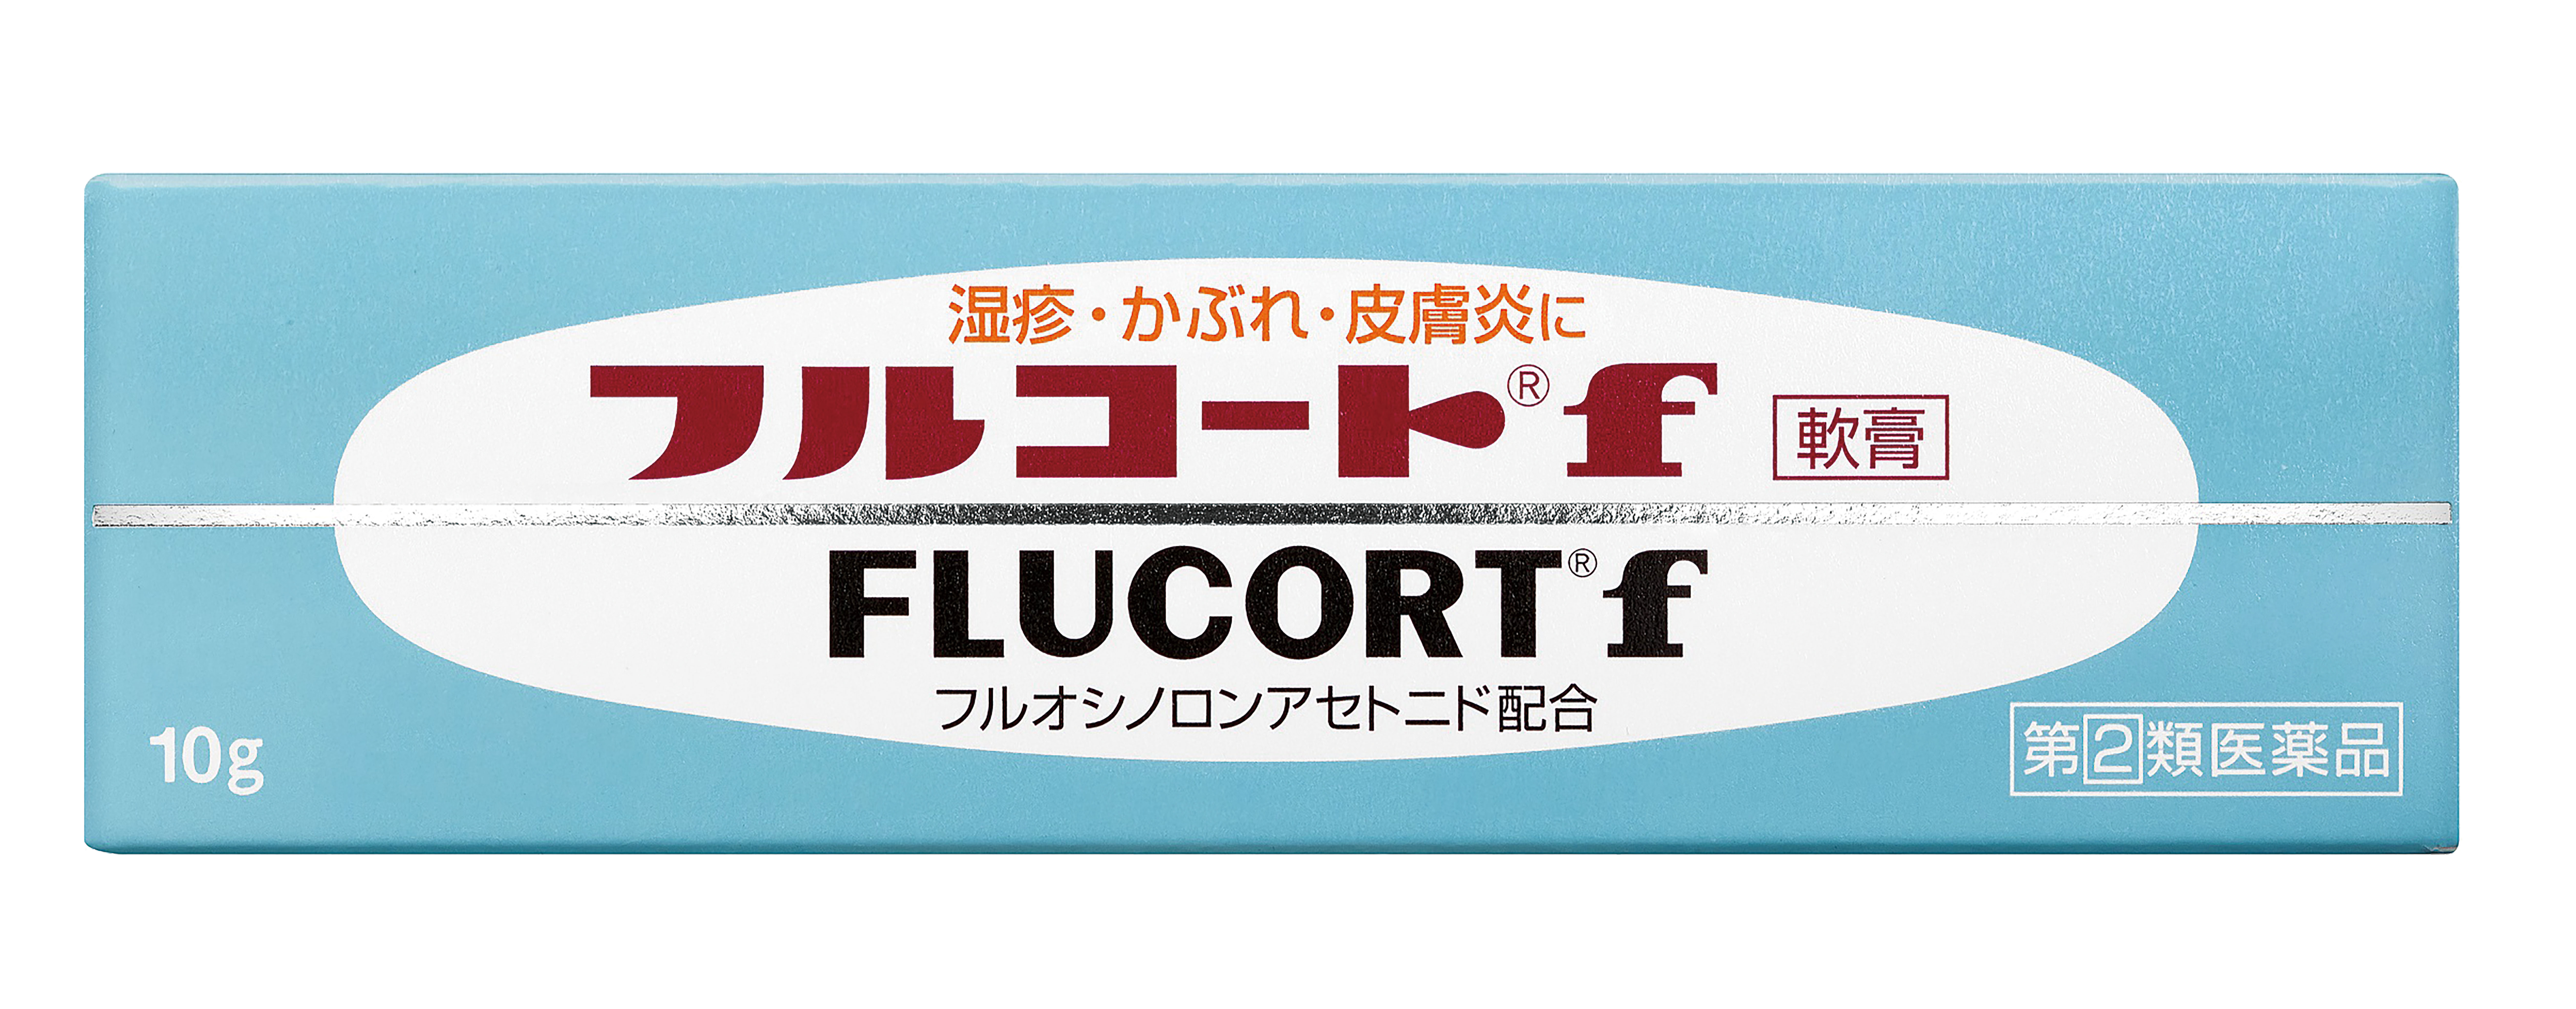 FLUCORT f